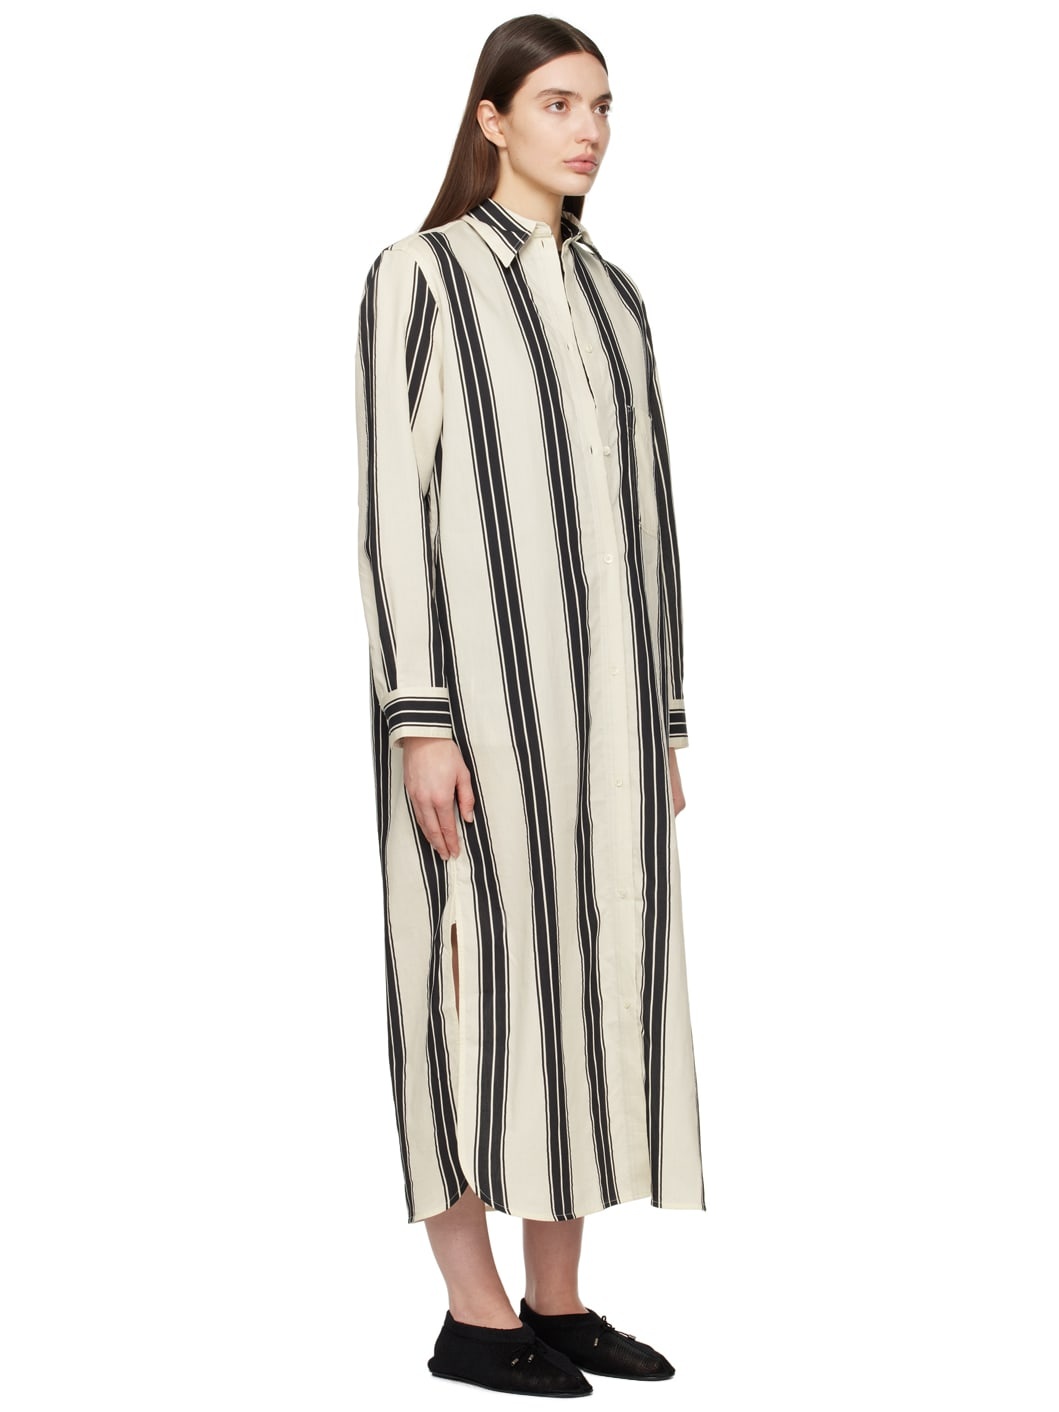 Black & White Striped Maxi Dress - 2